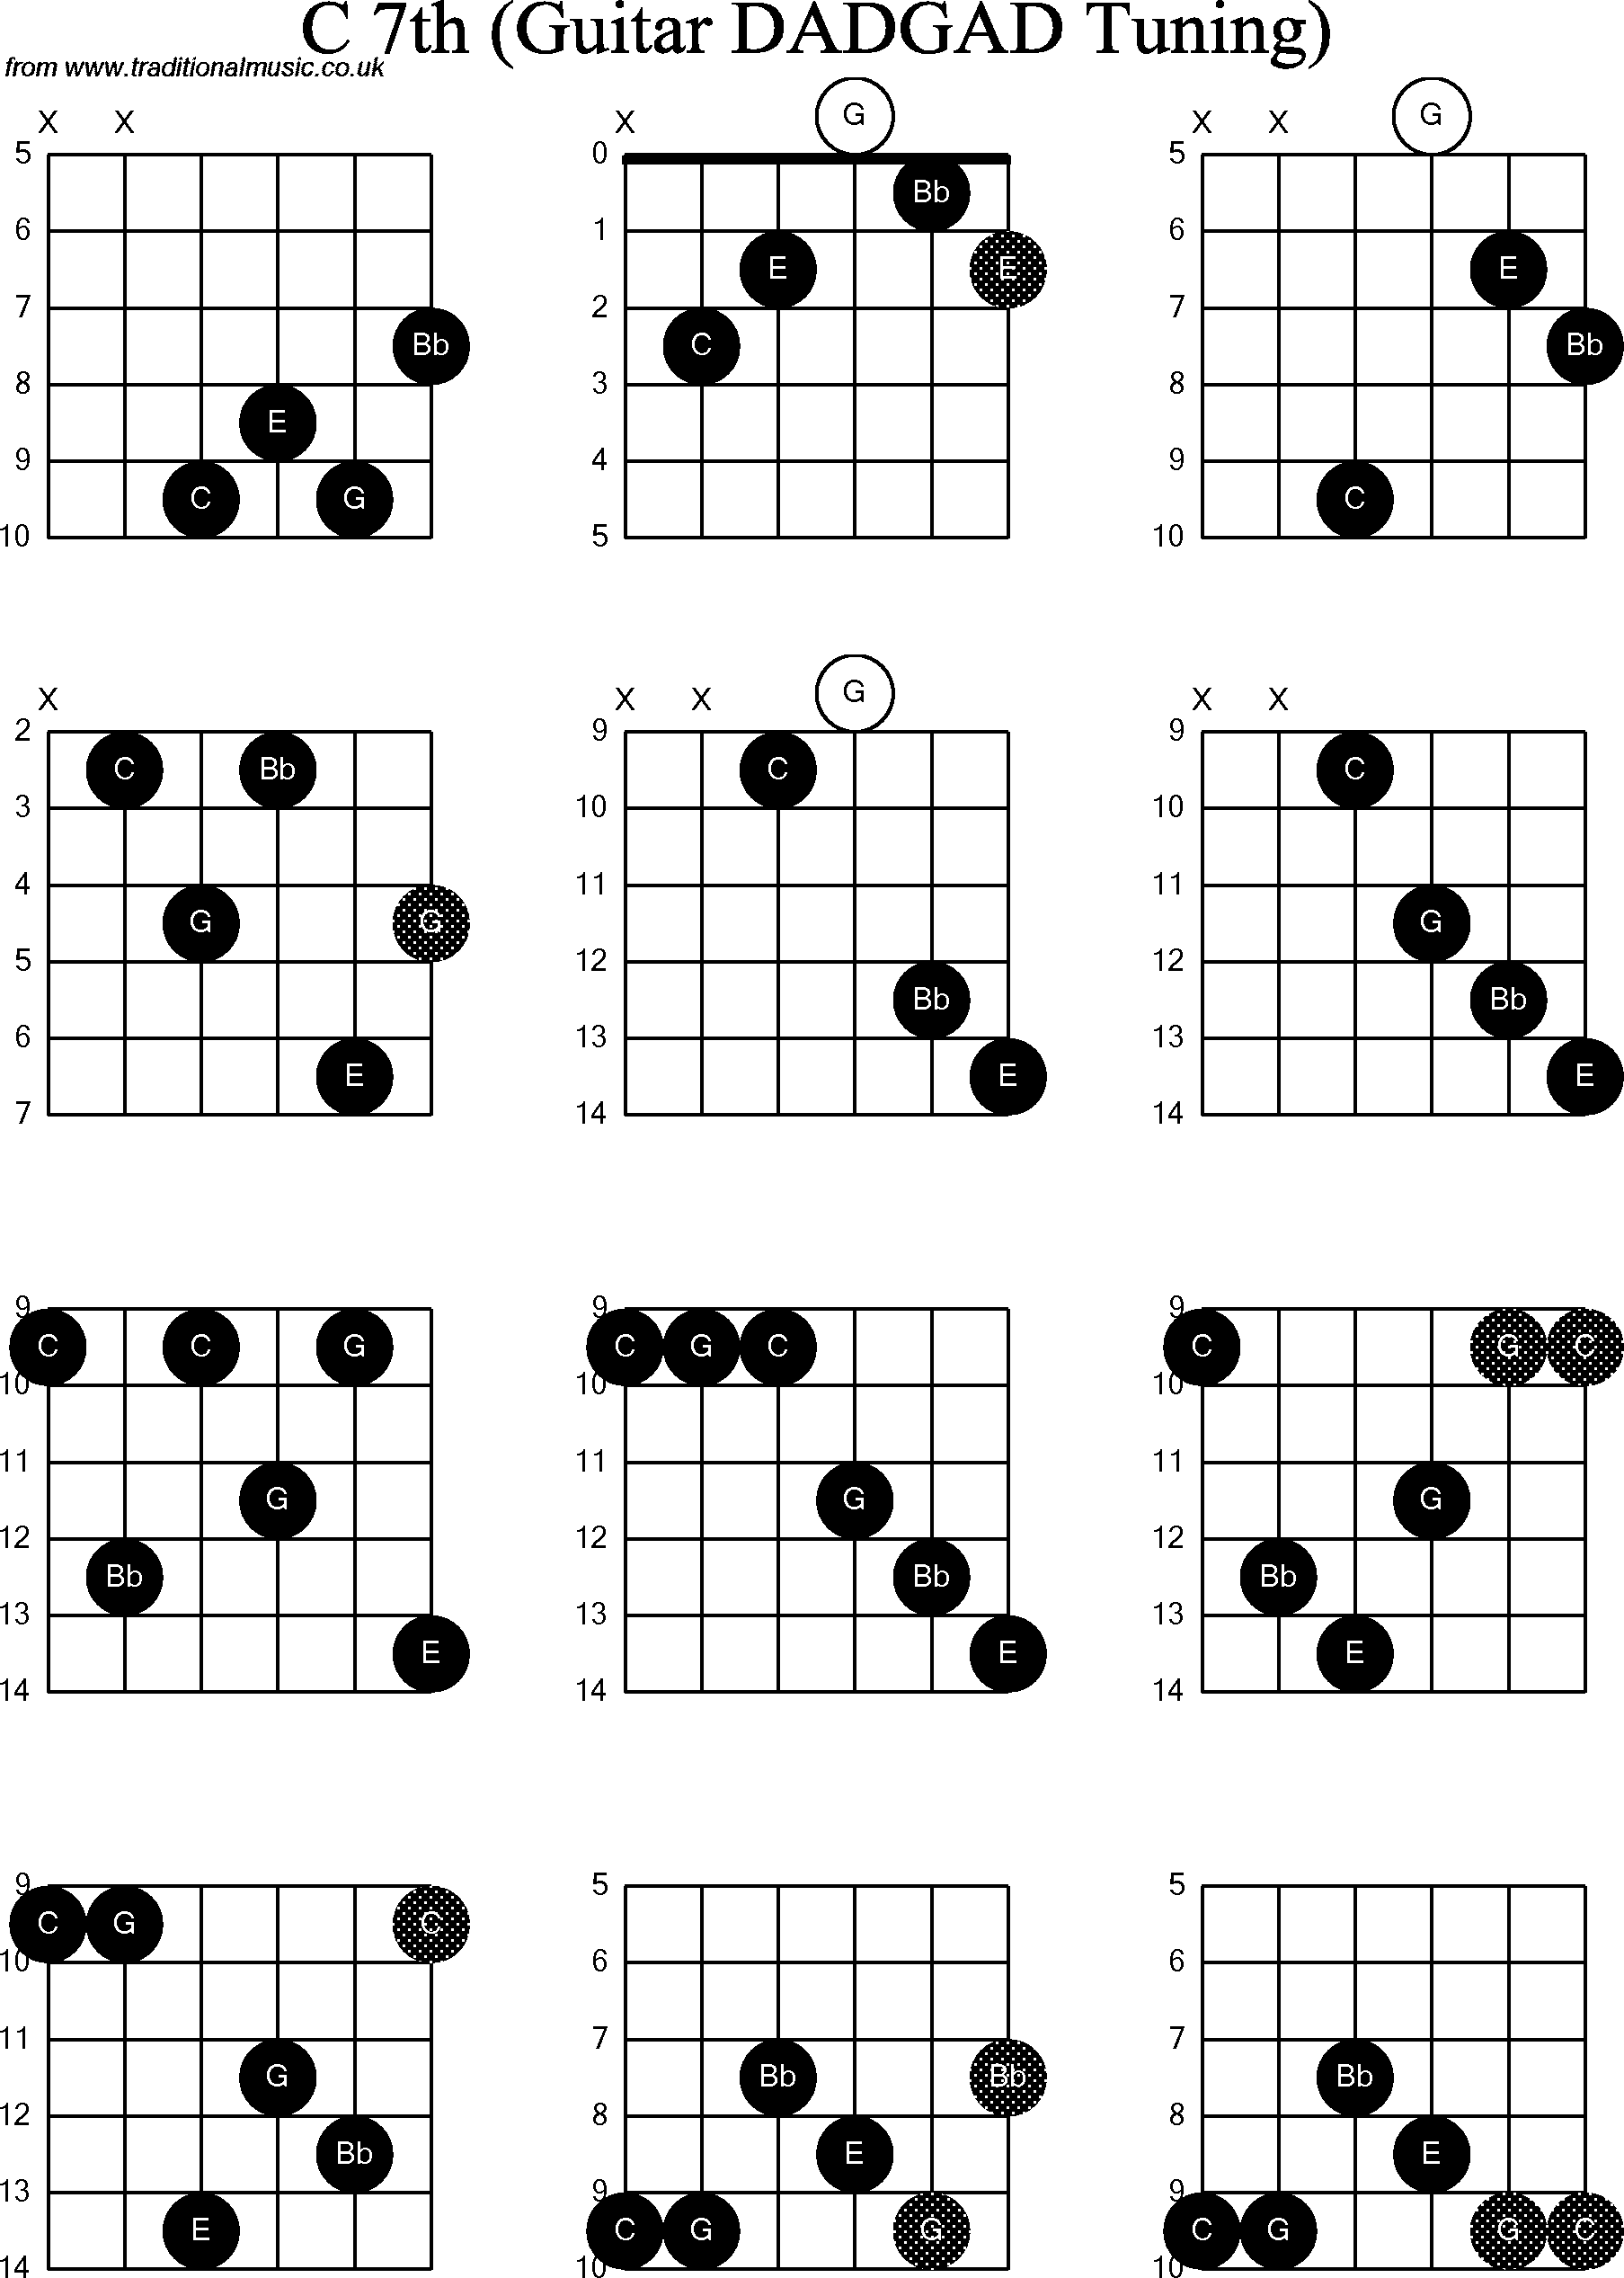 Chord Diagrams for D Modal Guitar(DADGAD), C7th